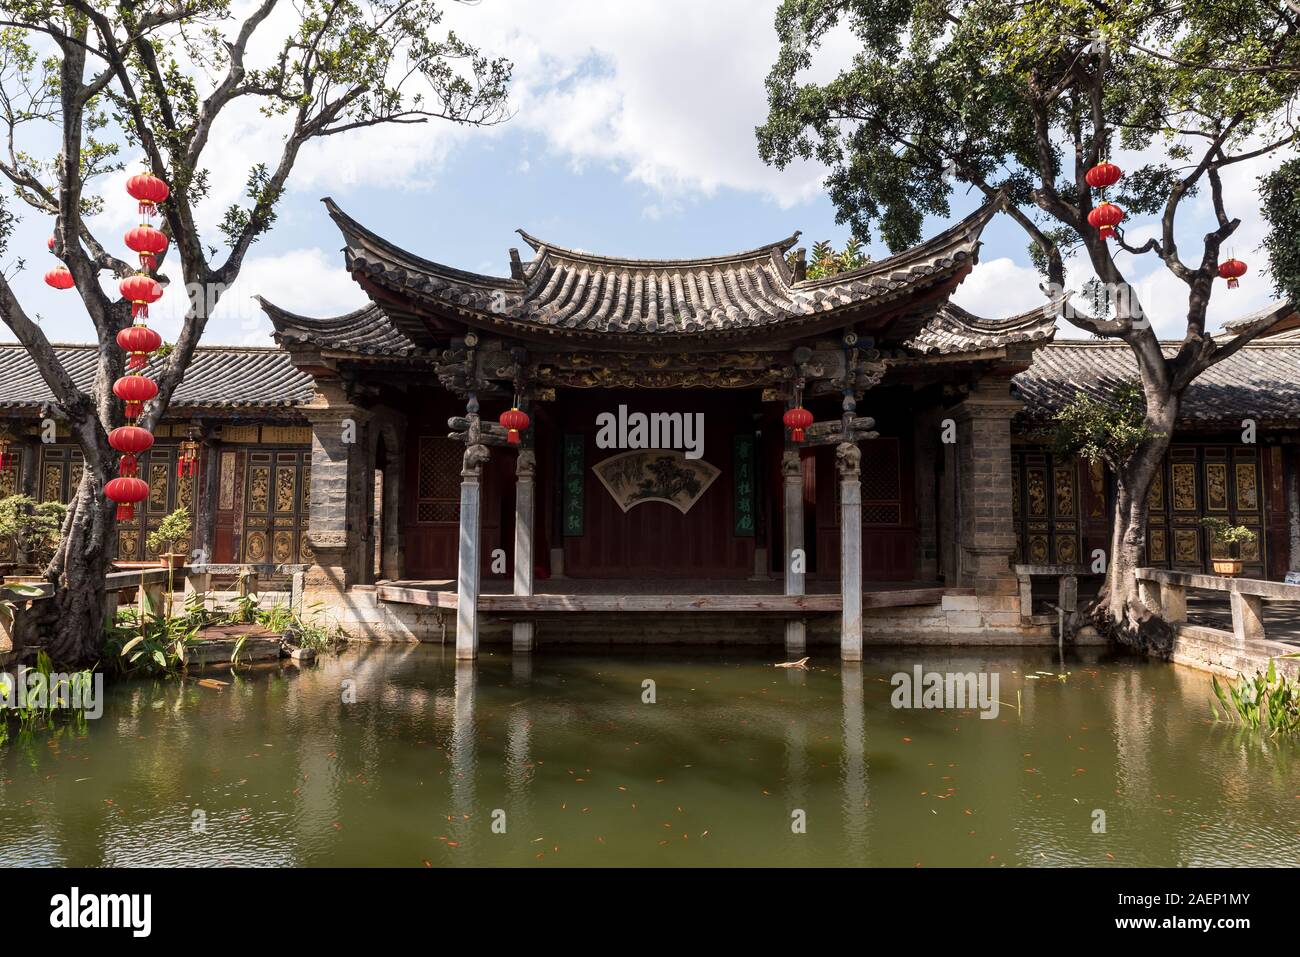 March 7, 2019: Zhu family garden in the traditional chinese town of Jianshui, China Stock Photo